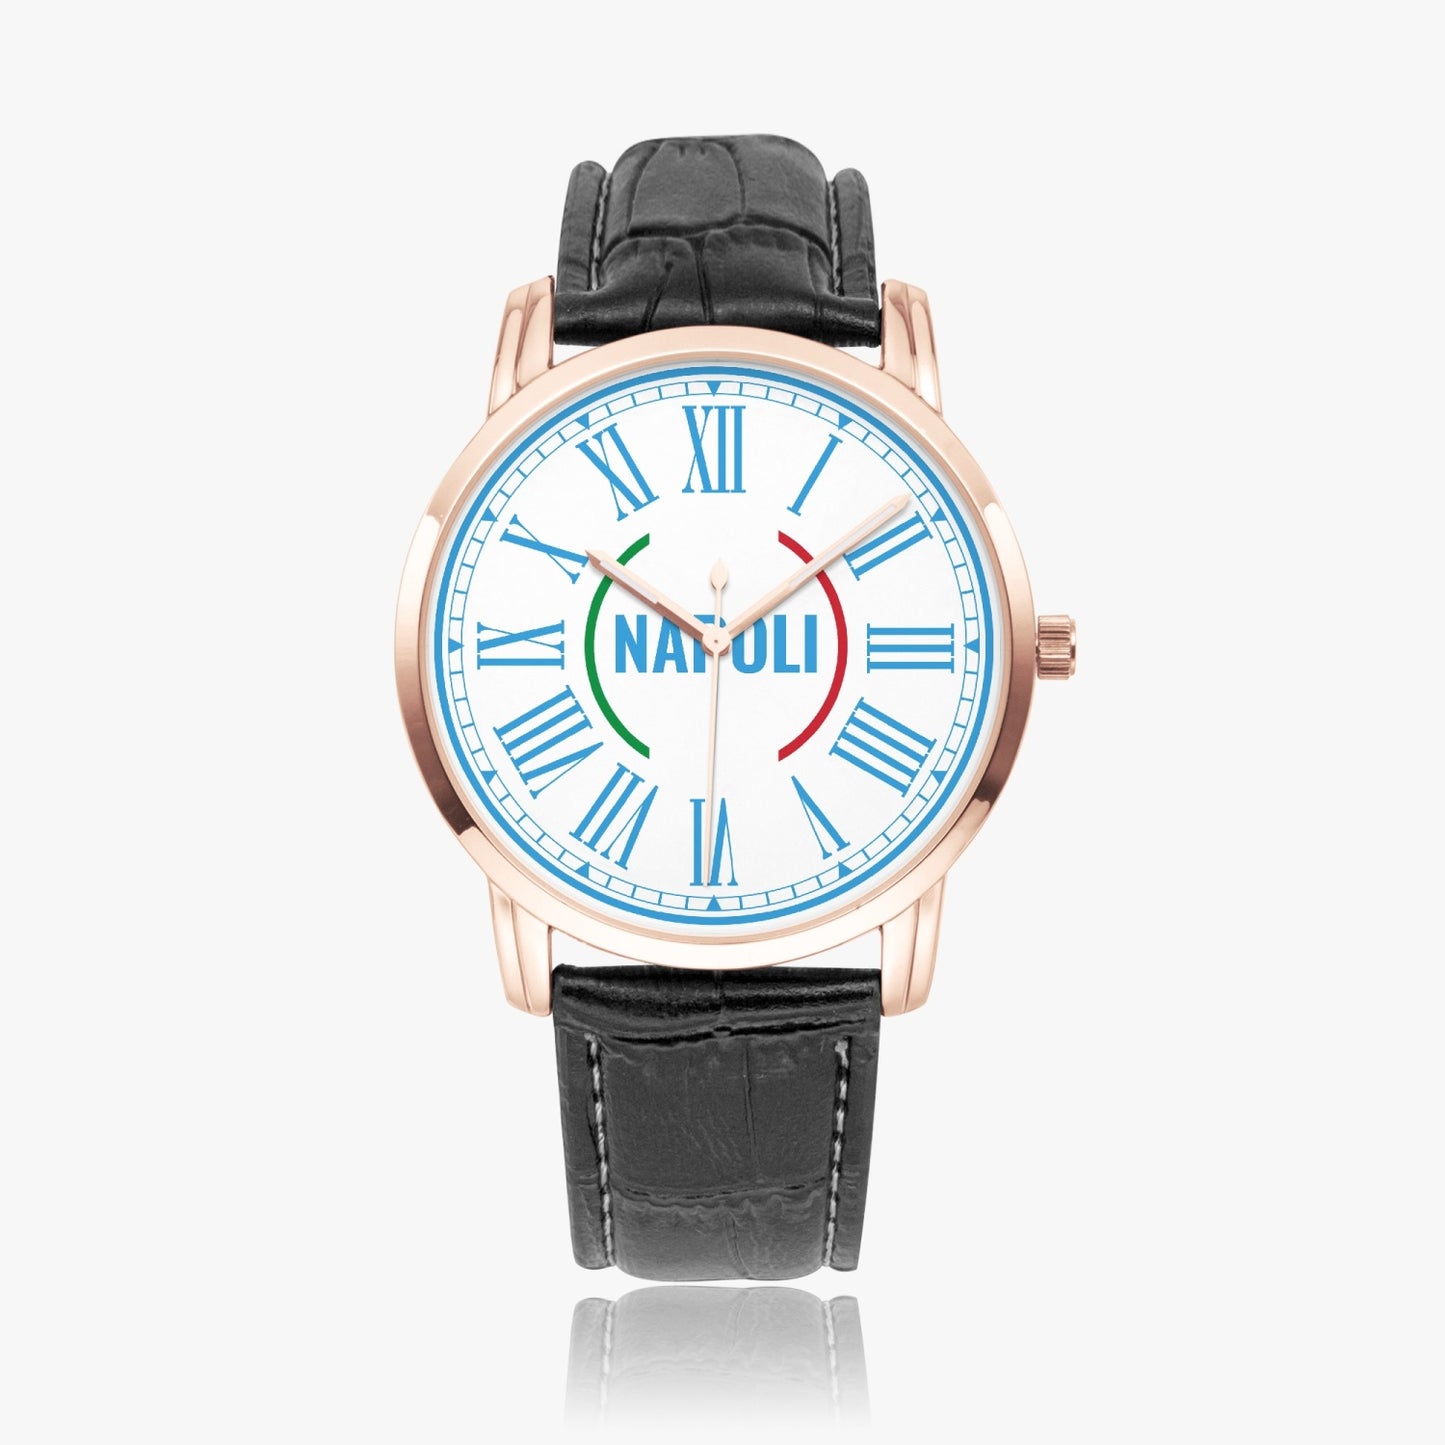 Quartz watch - Napoli